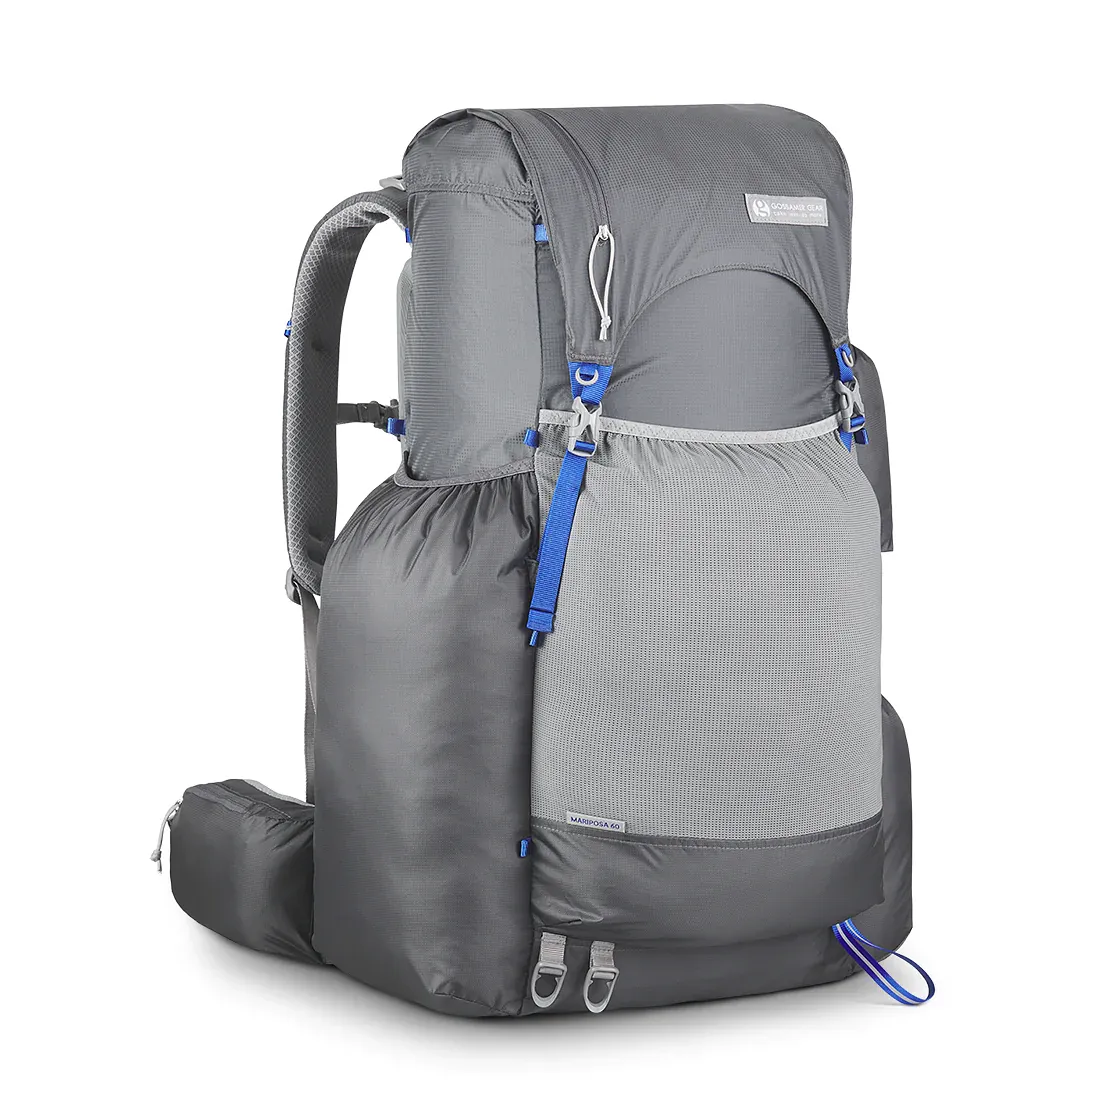 Gossamer Gear Mariposa 60 Backpacking Backpack